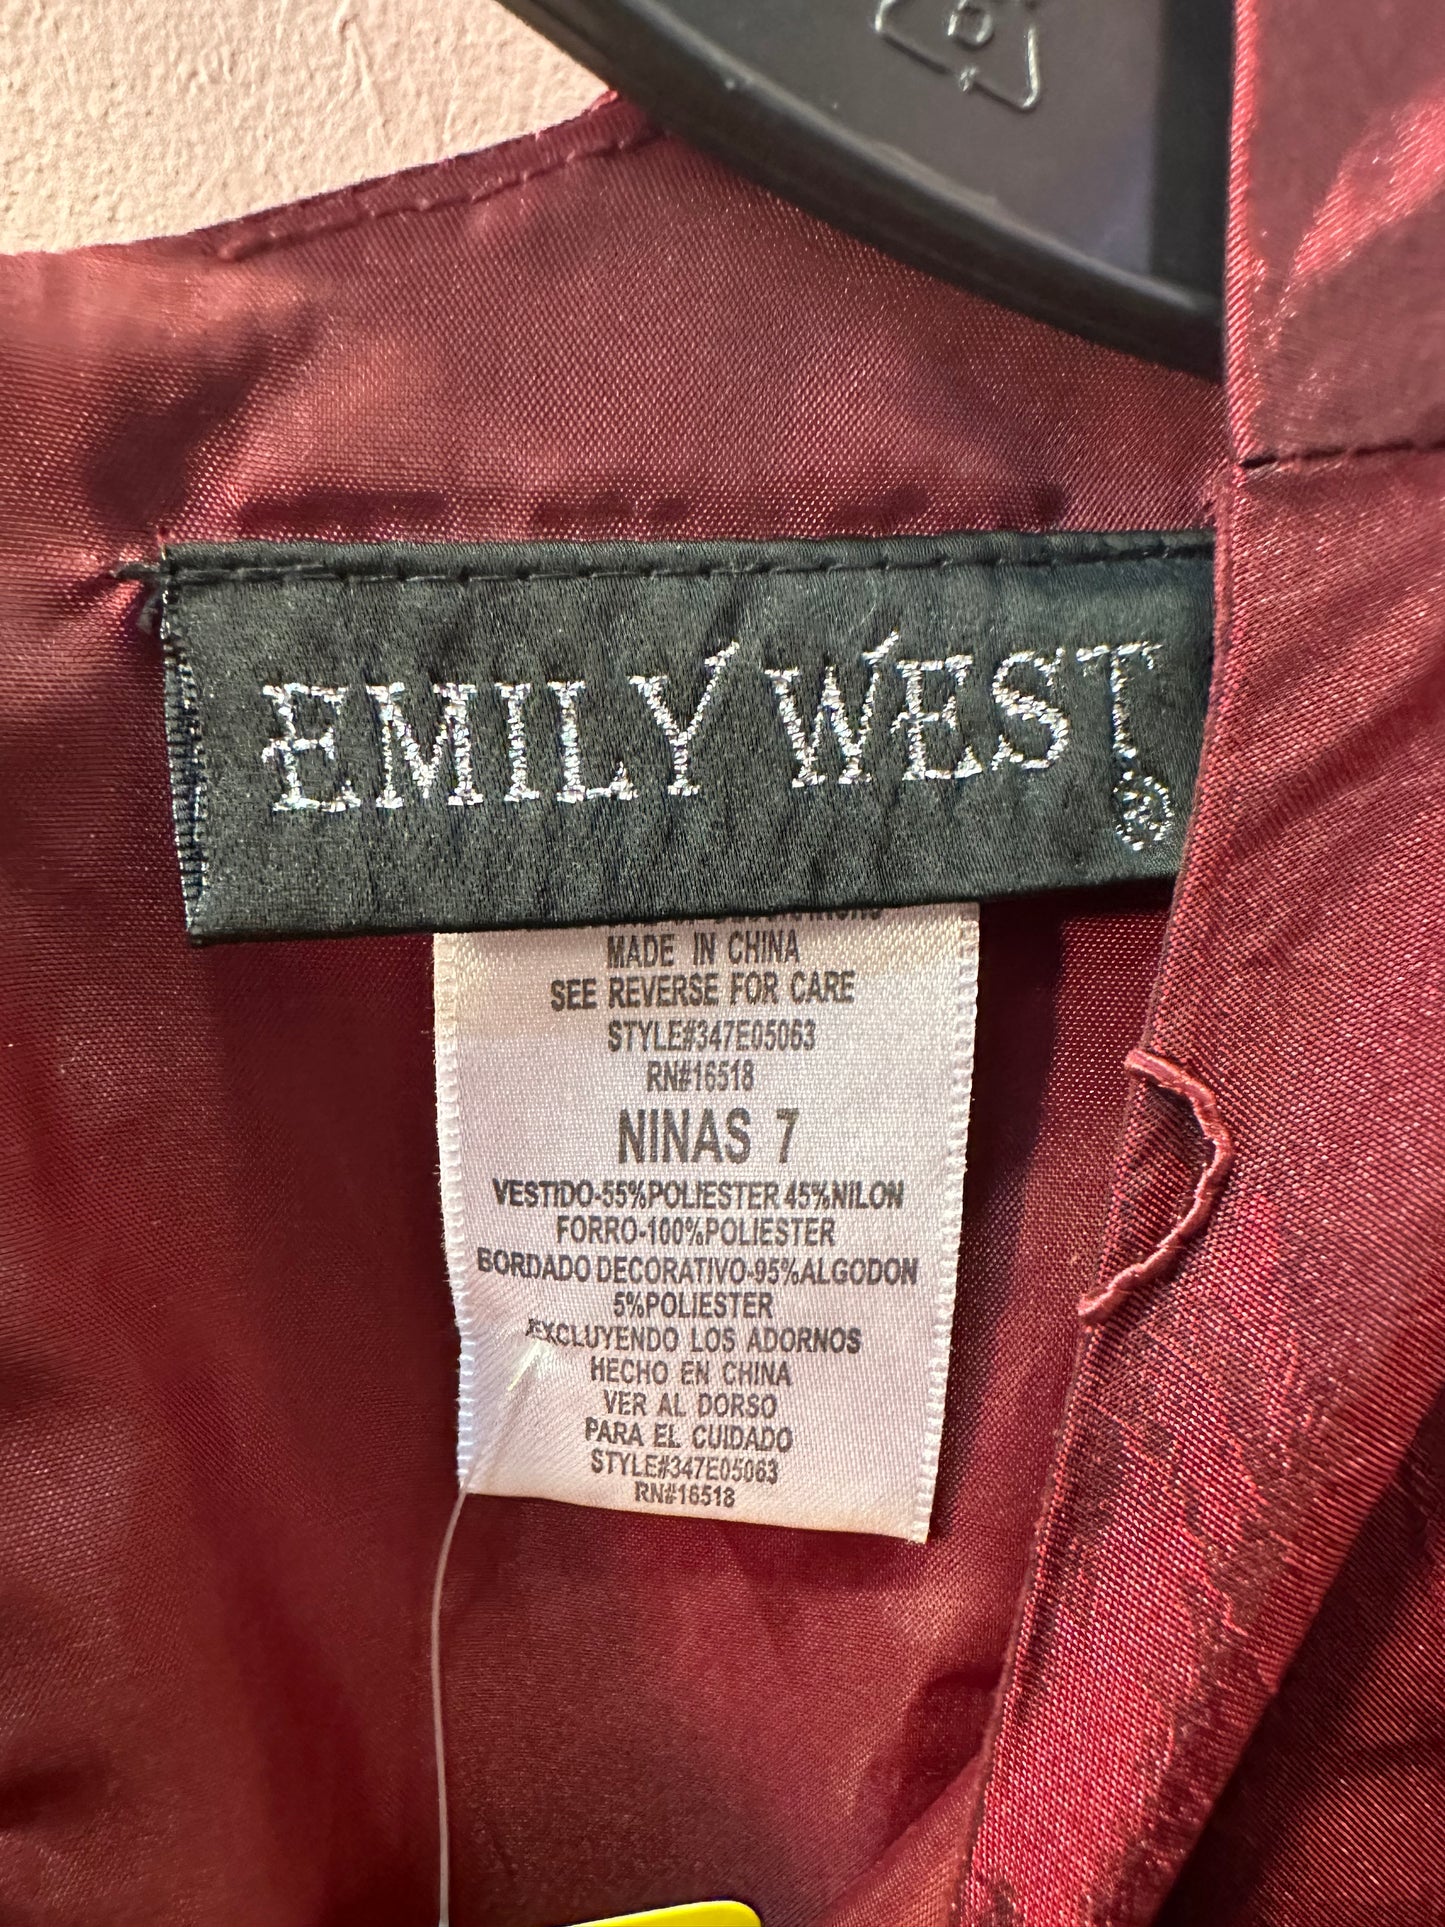 Emily West Girl's Metallic Maroon/ Burgundy Dress Sz 7 Formal Party Sleeveless